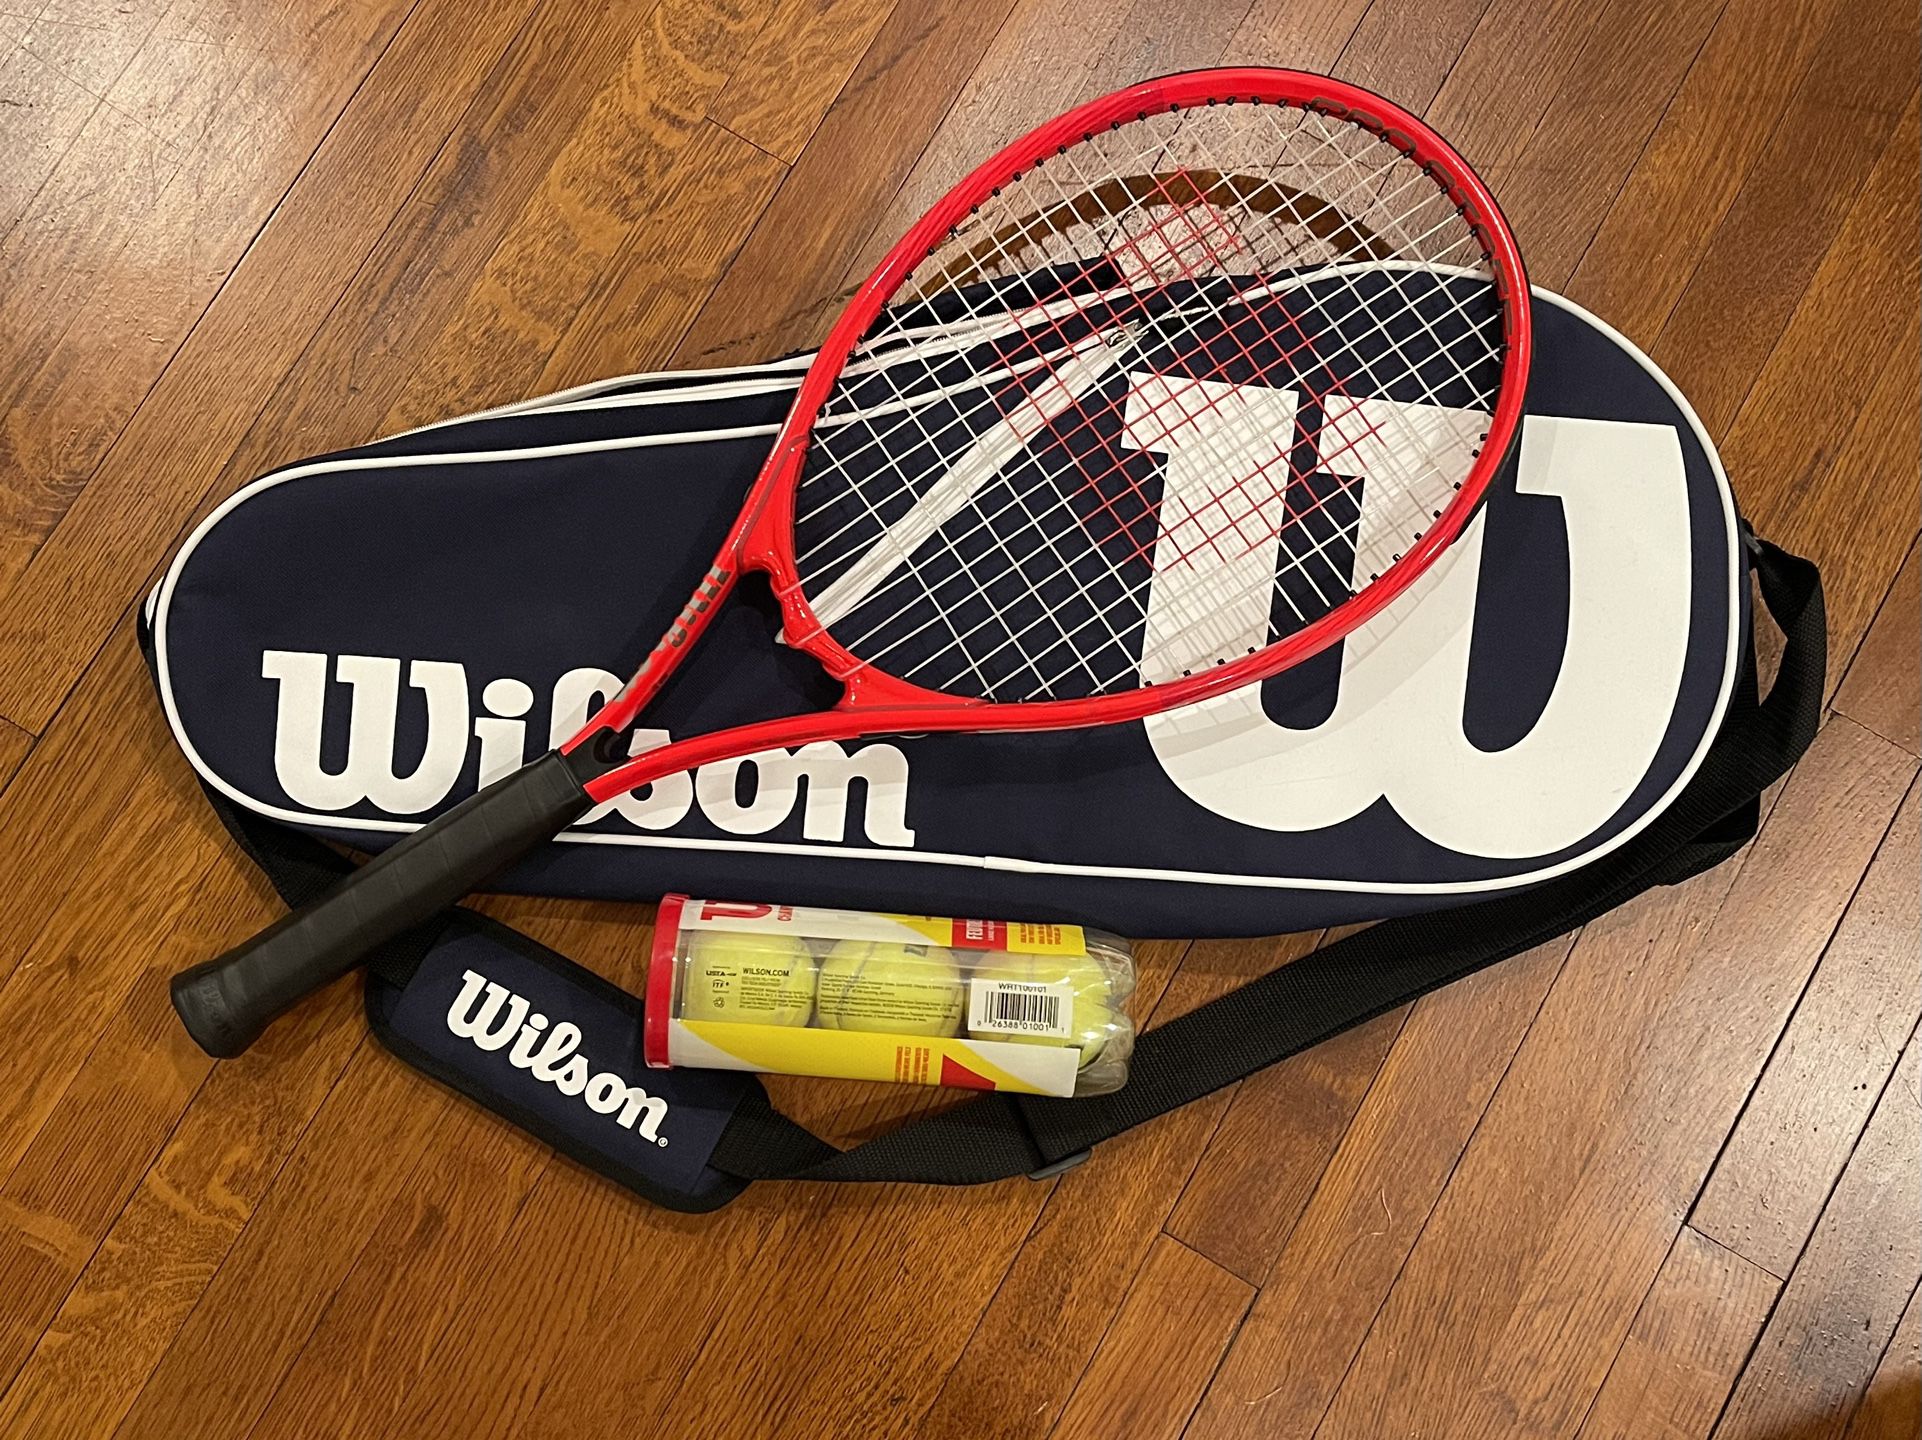 Wilson tennis Racket And Balls